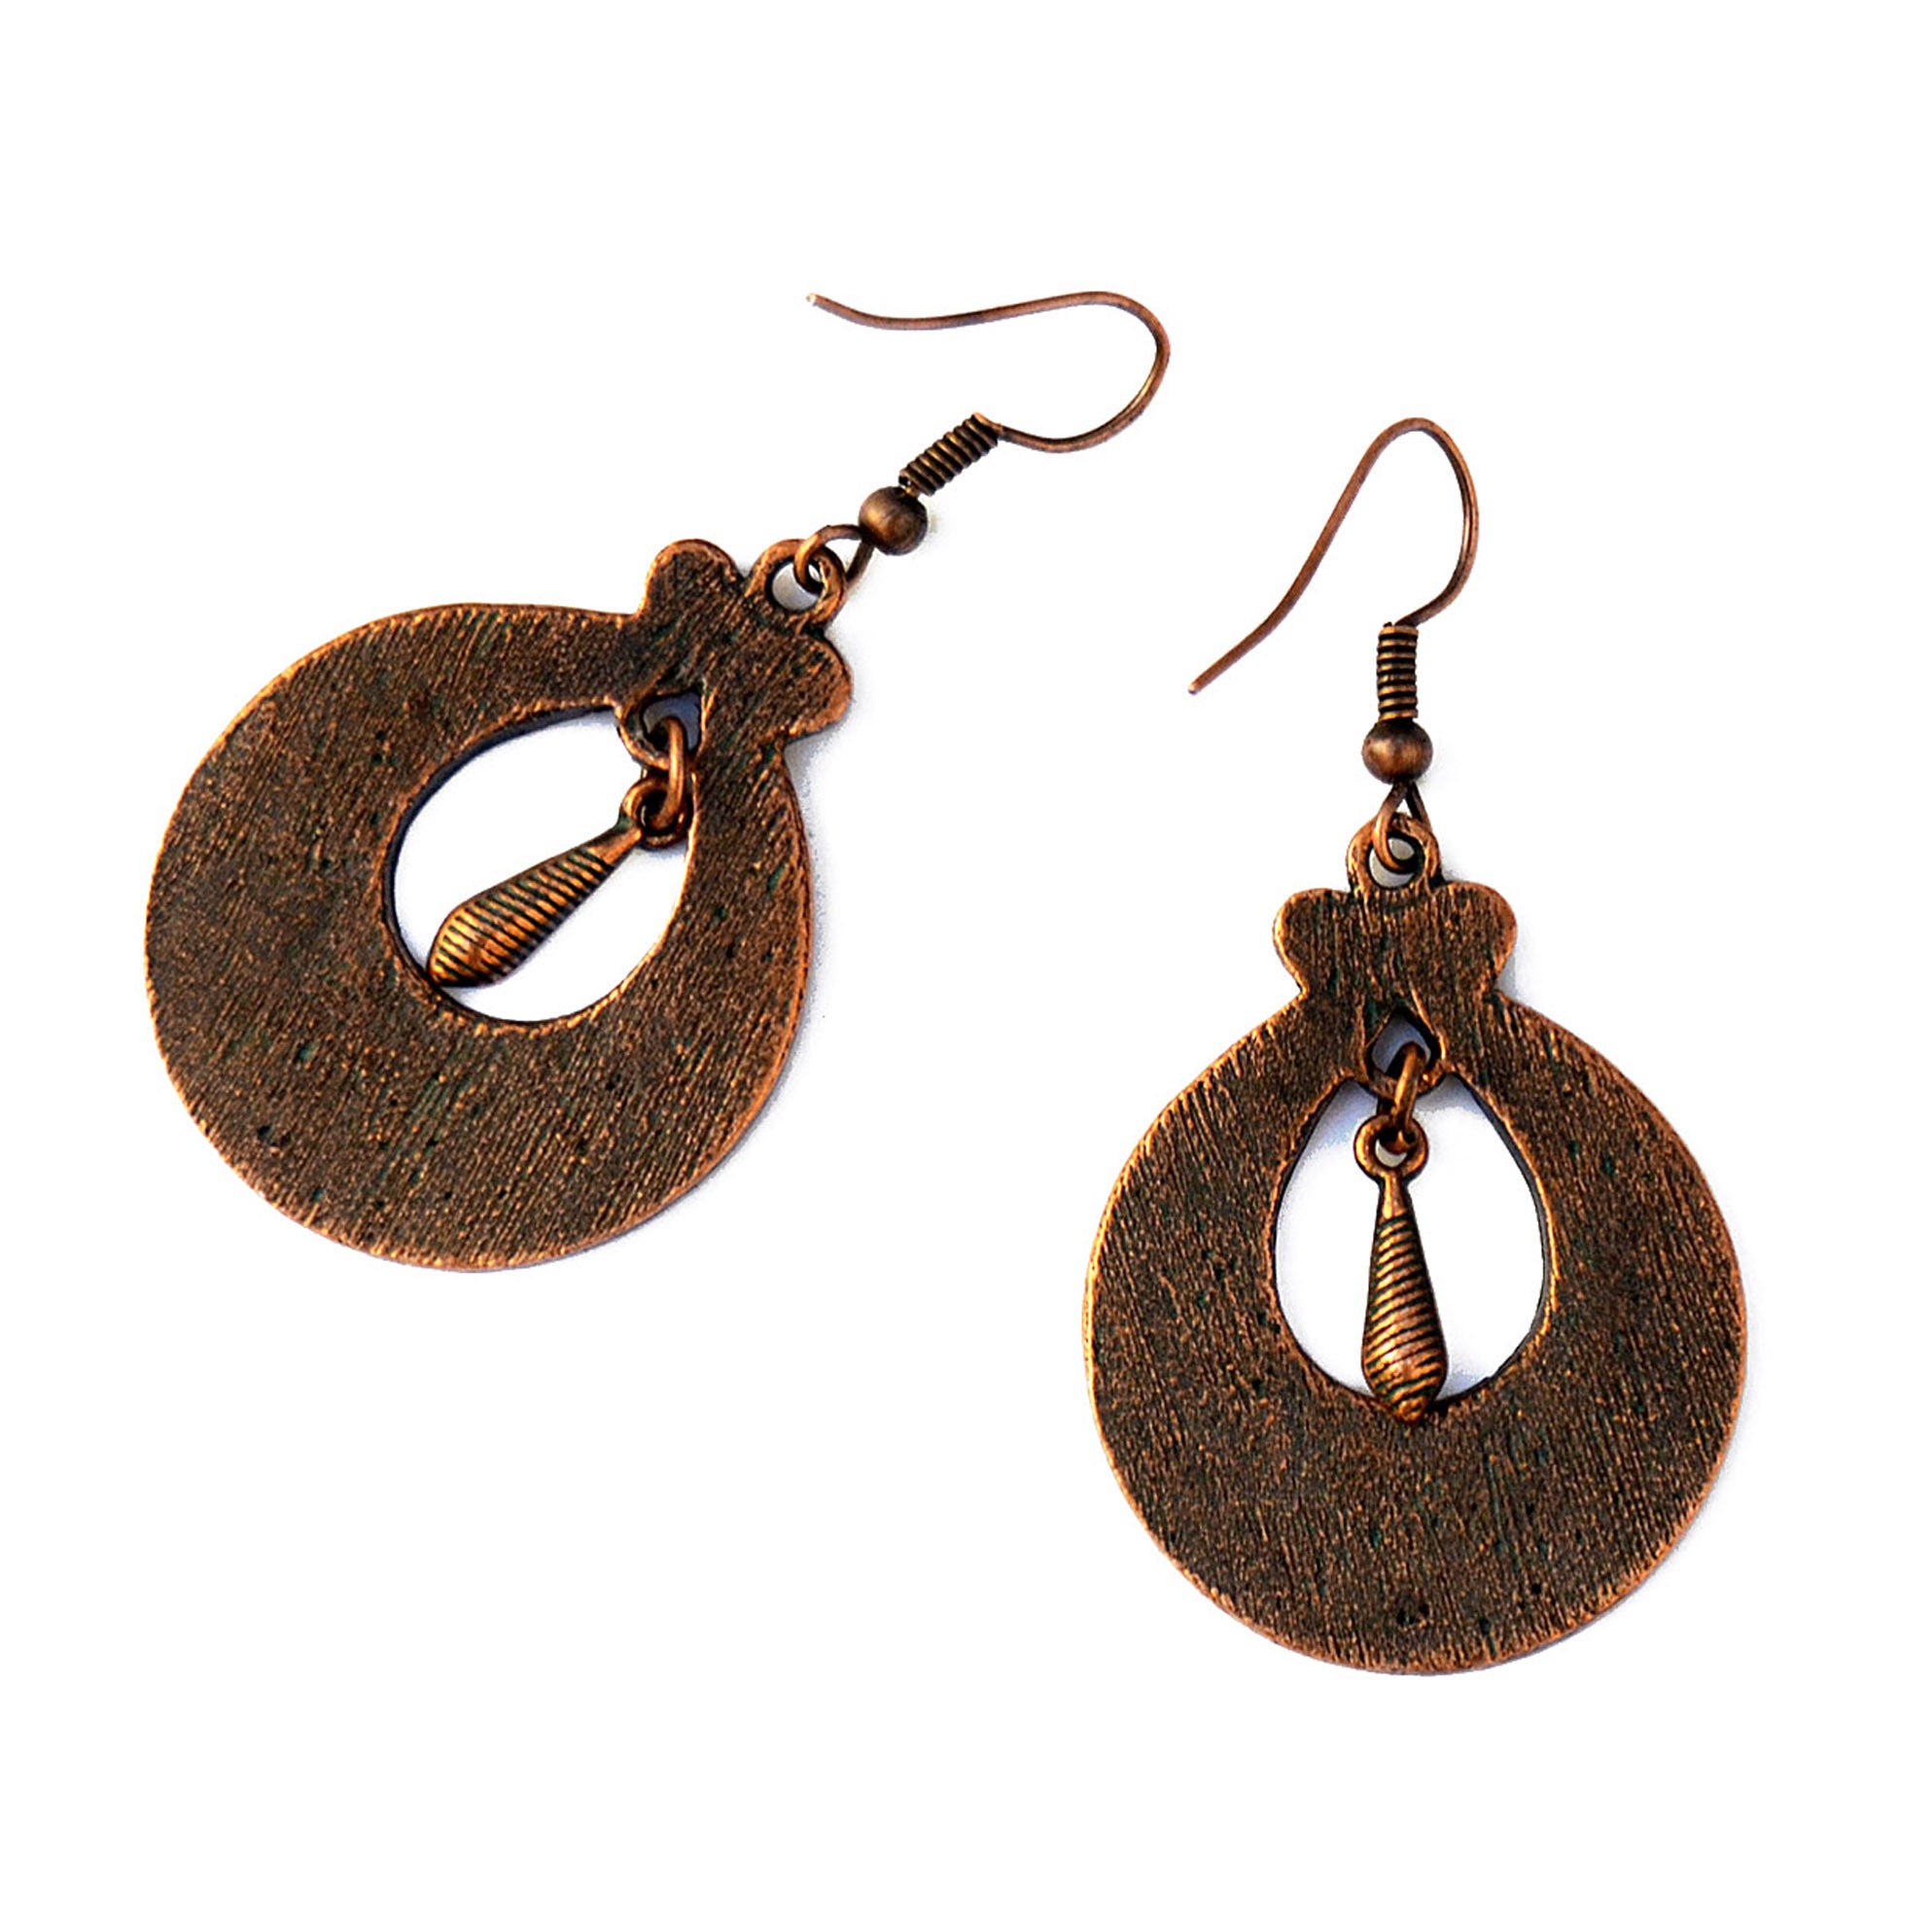 Verdigris copper earrings